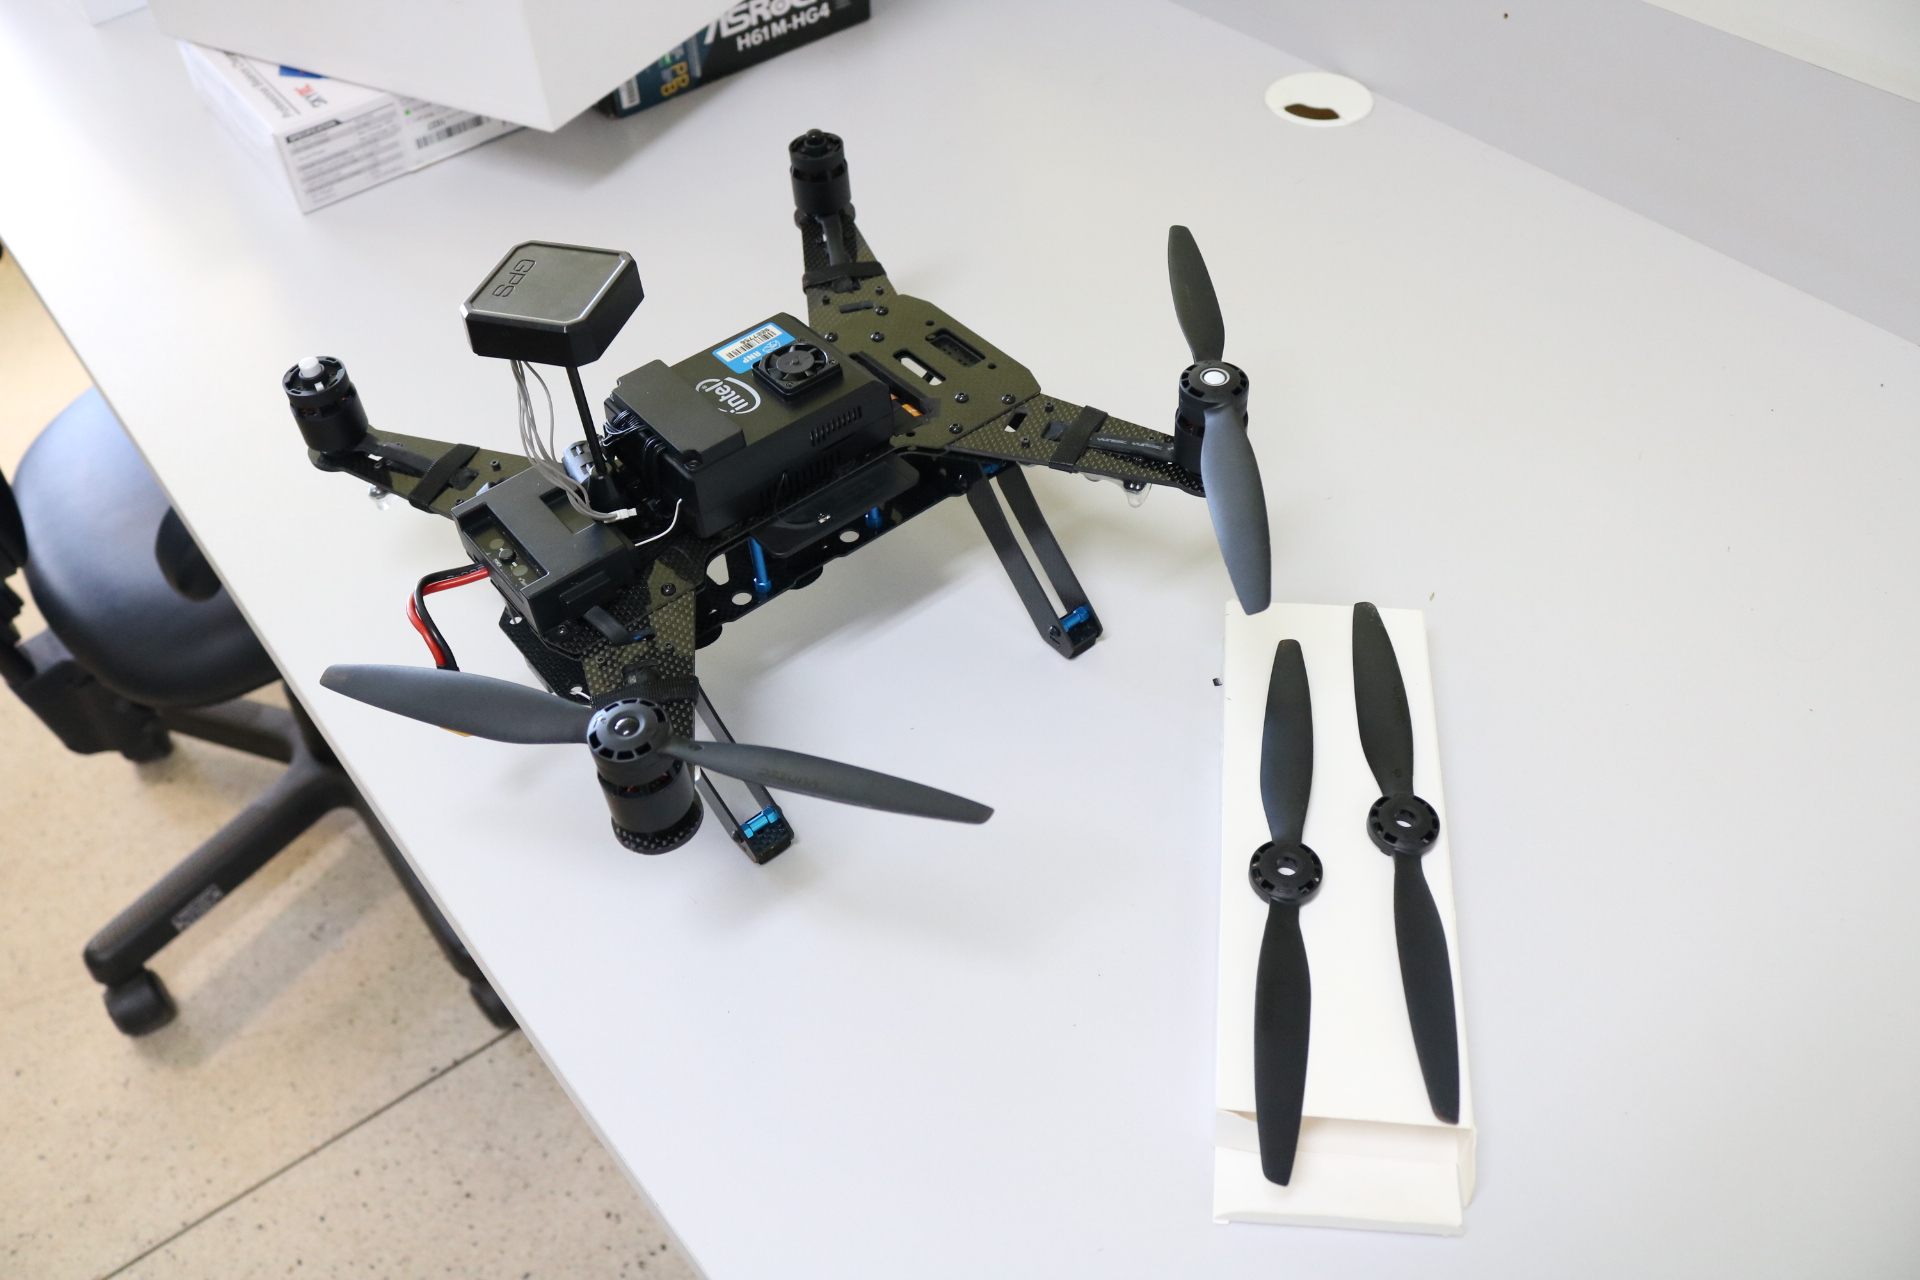 2_drones_marca_Intel_modelo_Aero_Ready_to_Fly1.JPG